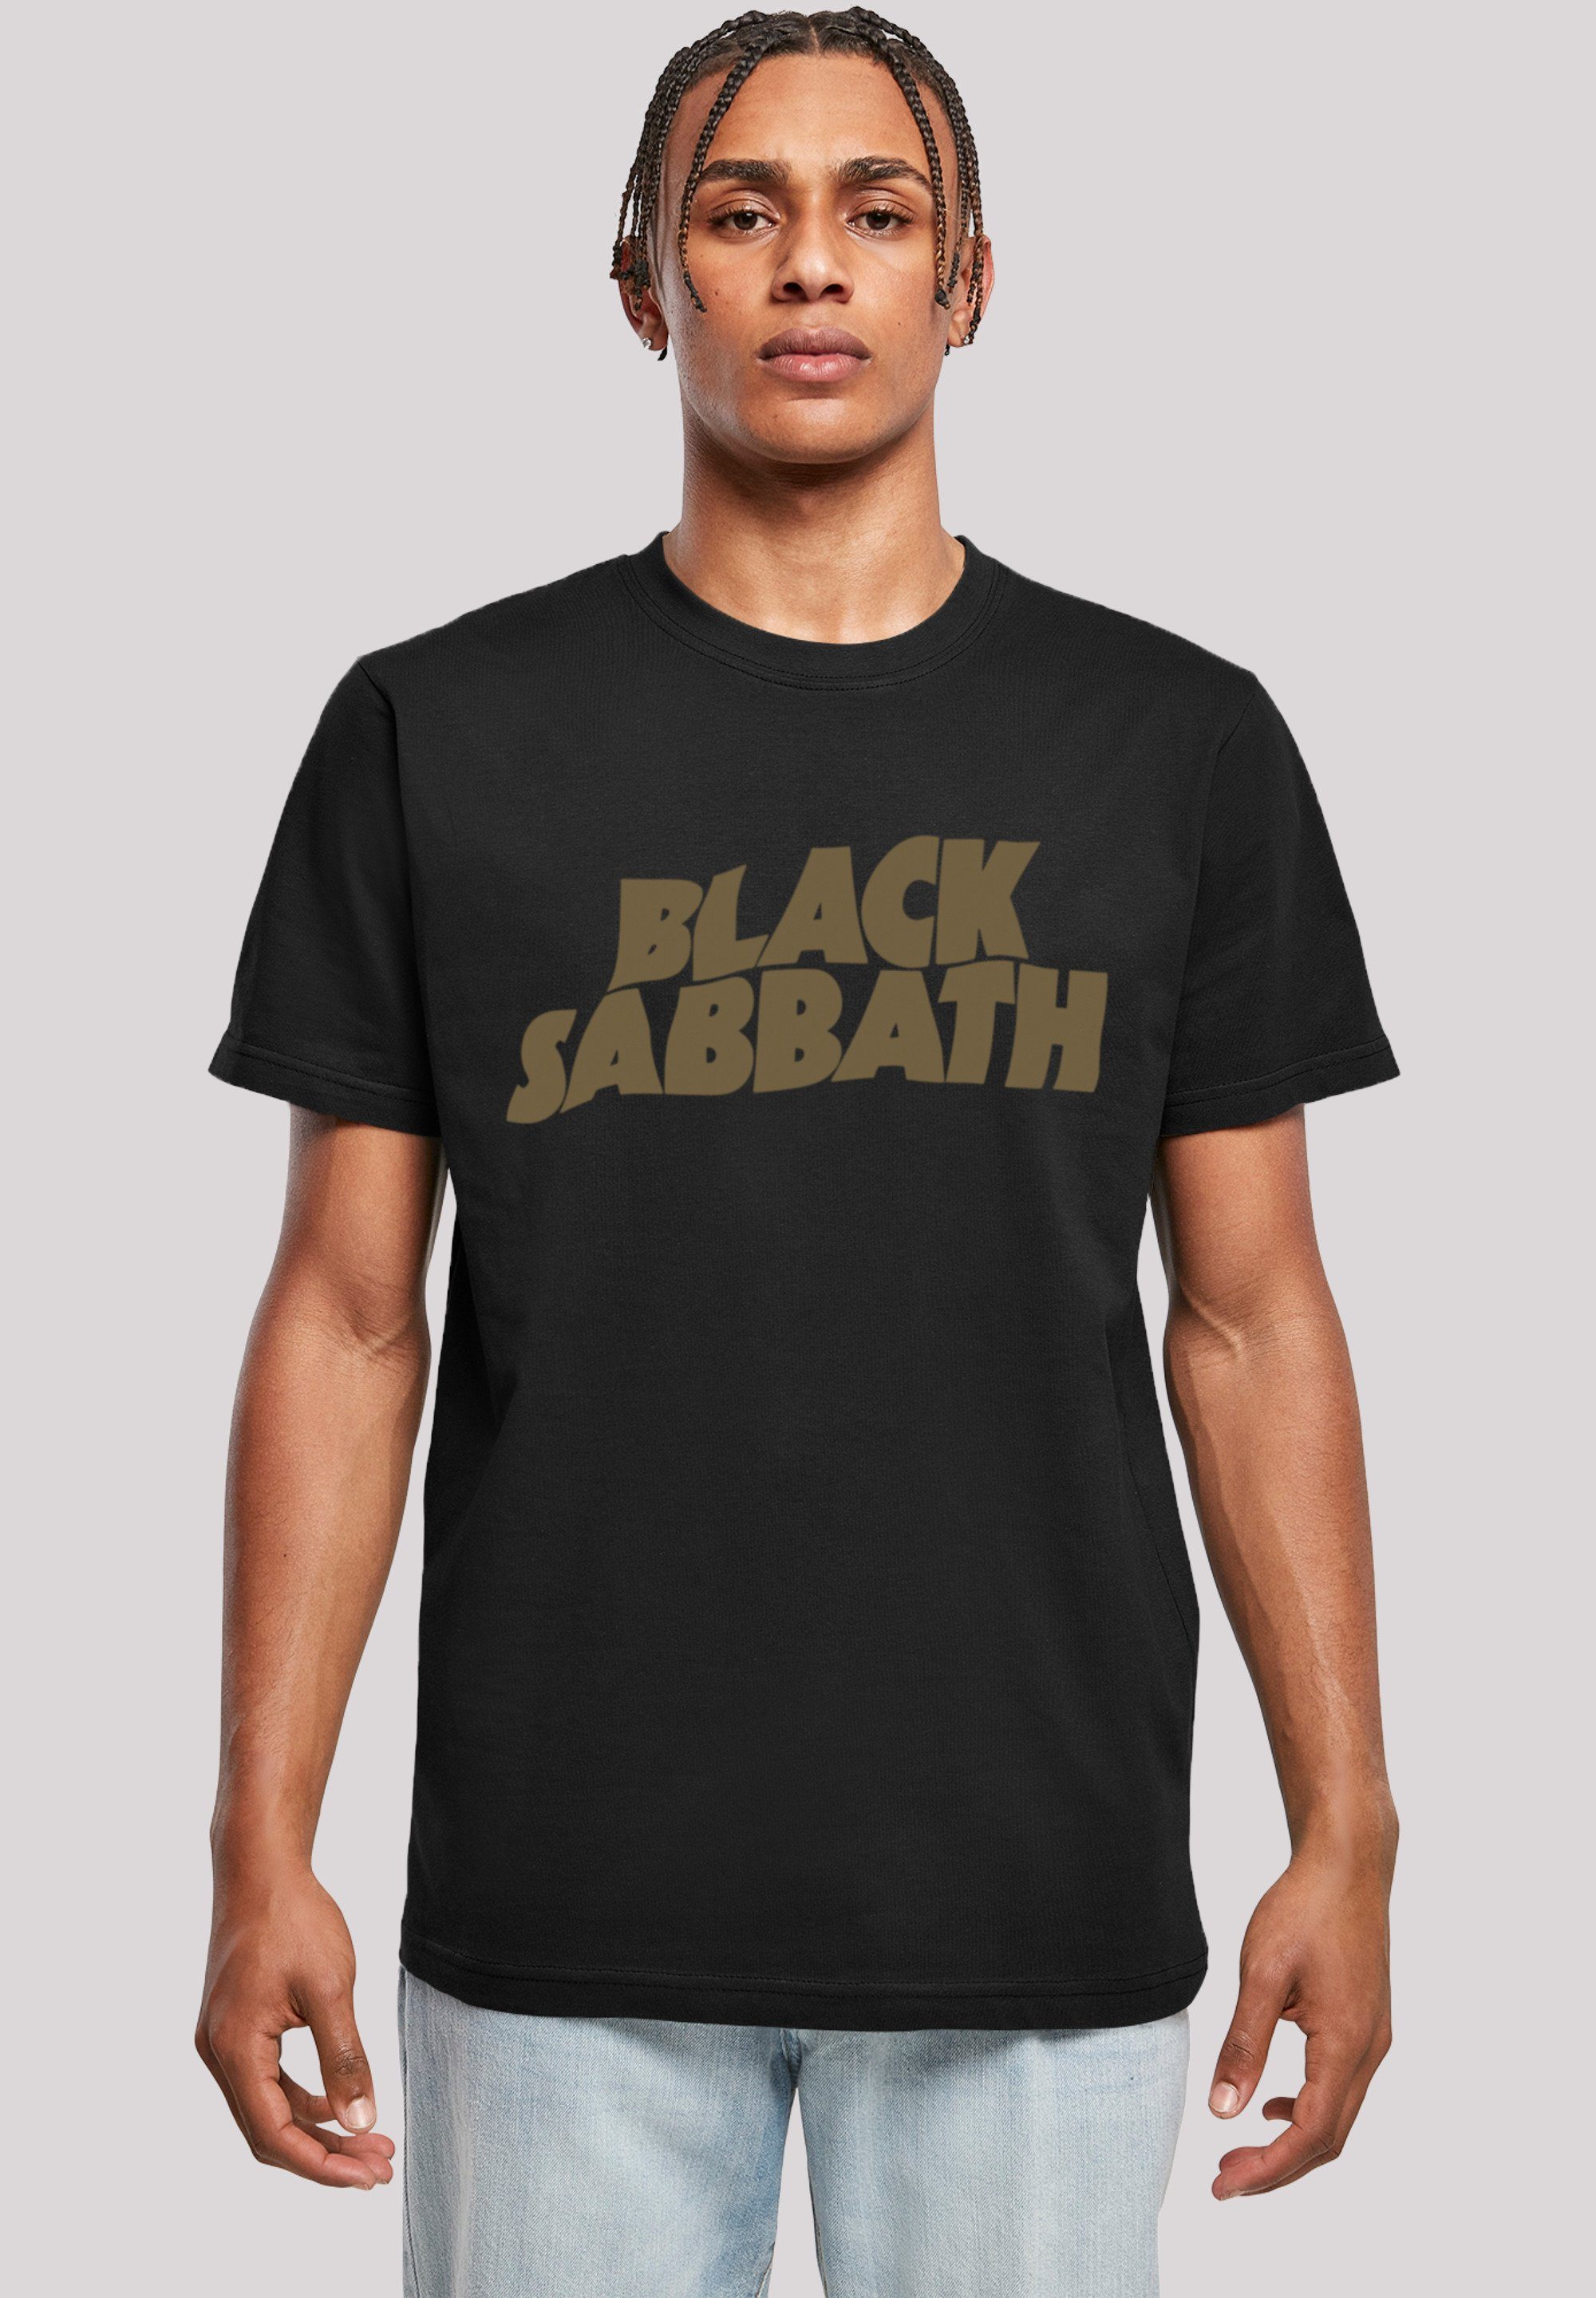 F4NT4STIC T-Shirt Black Sabbath Metal Band US Tour 1978 Black Zip Print